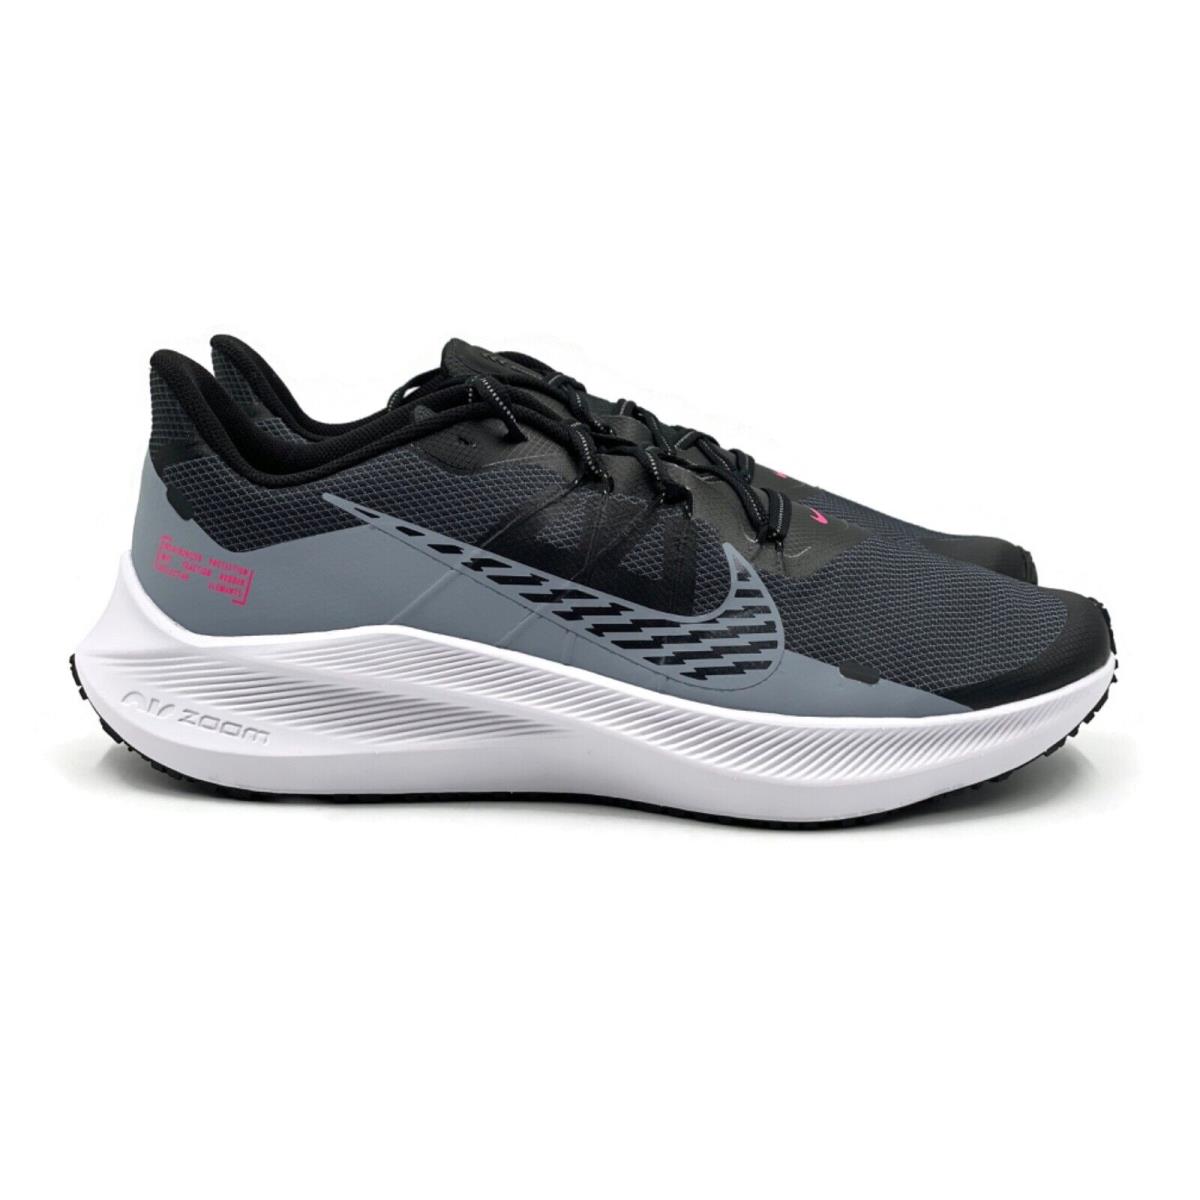 Nike Winflo 7 Shield Men Casual Running Shoe Black White Athletic Sneaker - White Black Gray